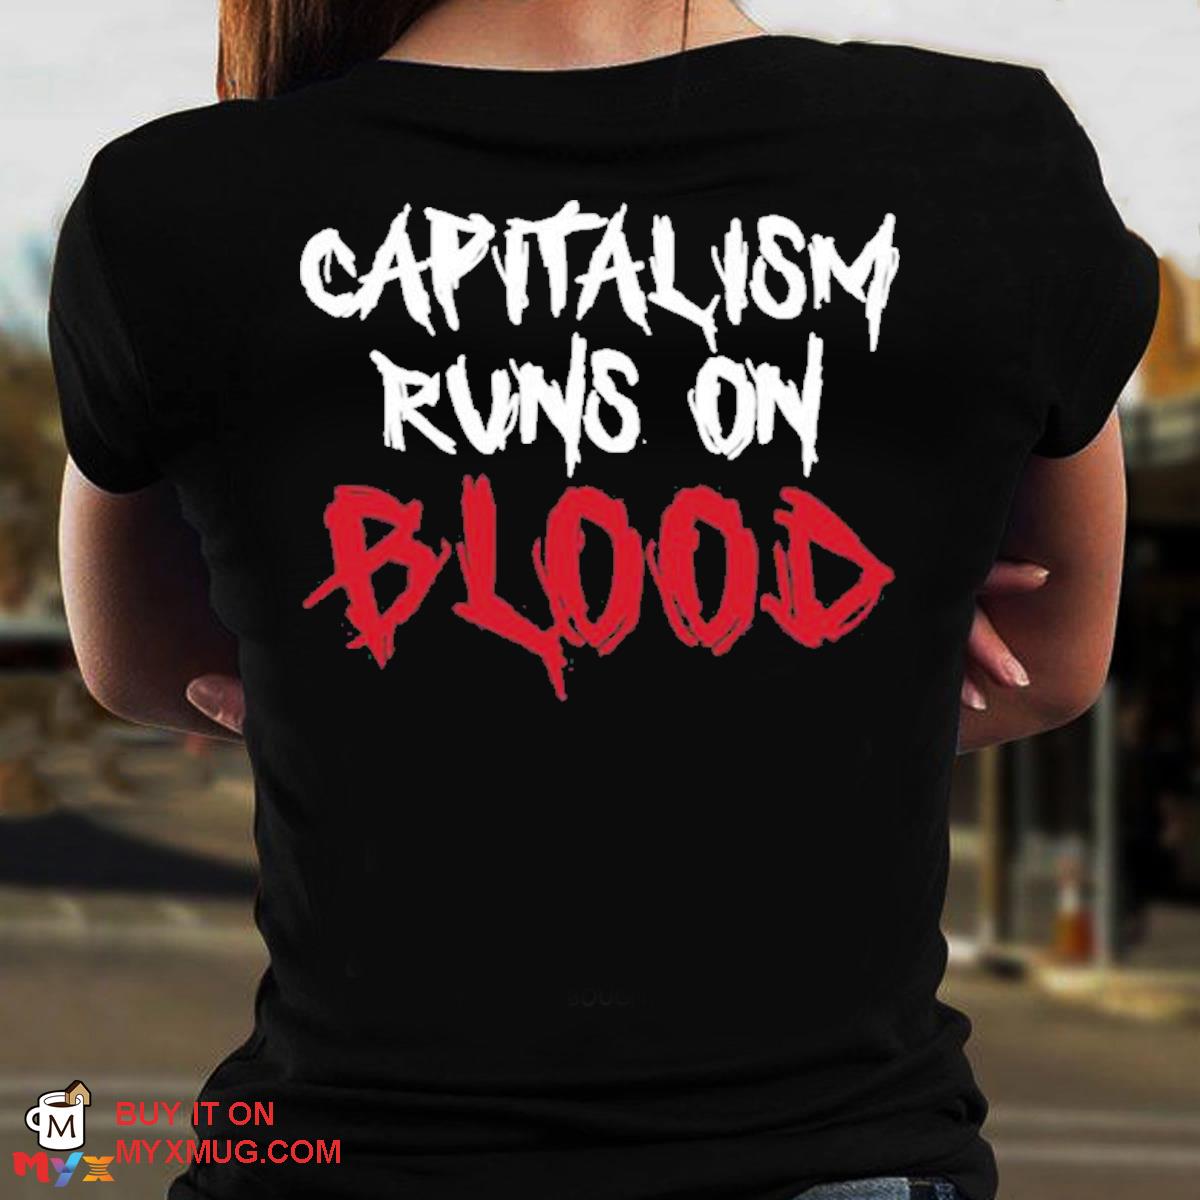 Capitalism runs on blood war is racket left flank vets merch capitalism runs on blood s shirt print on back